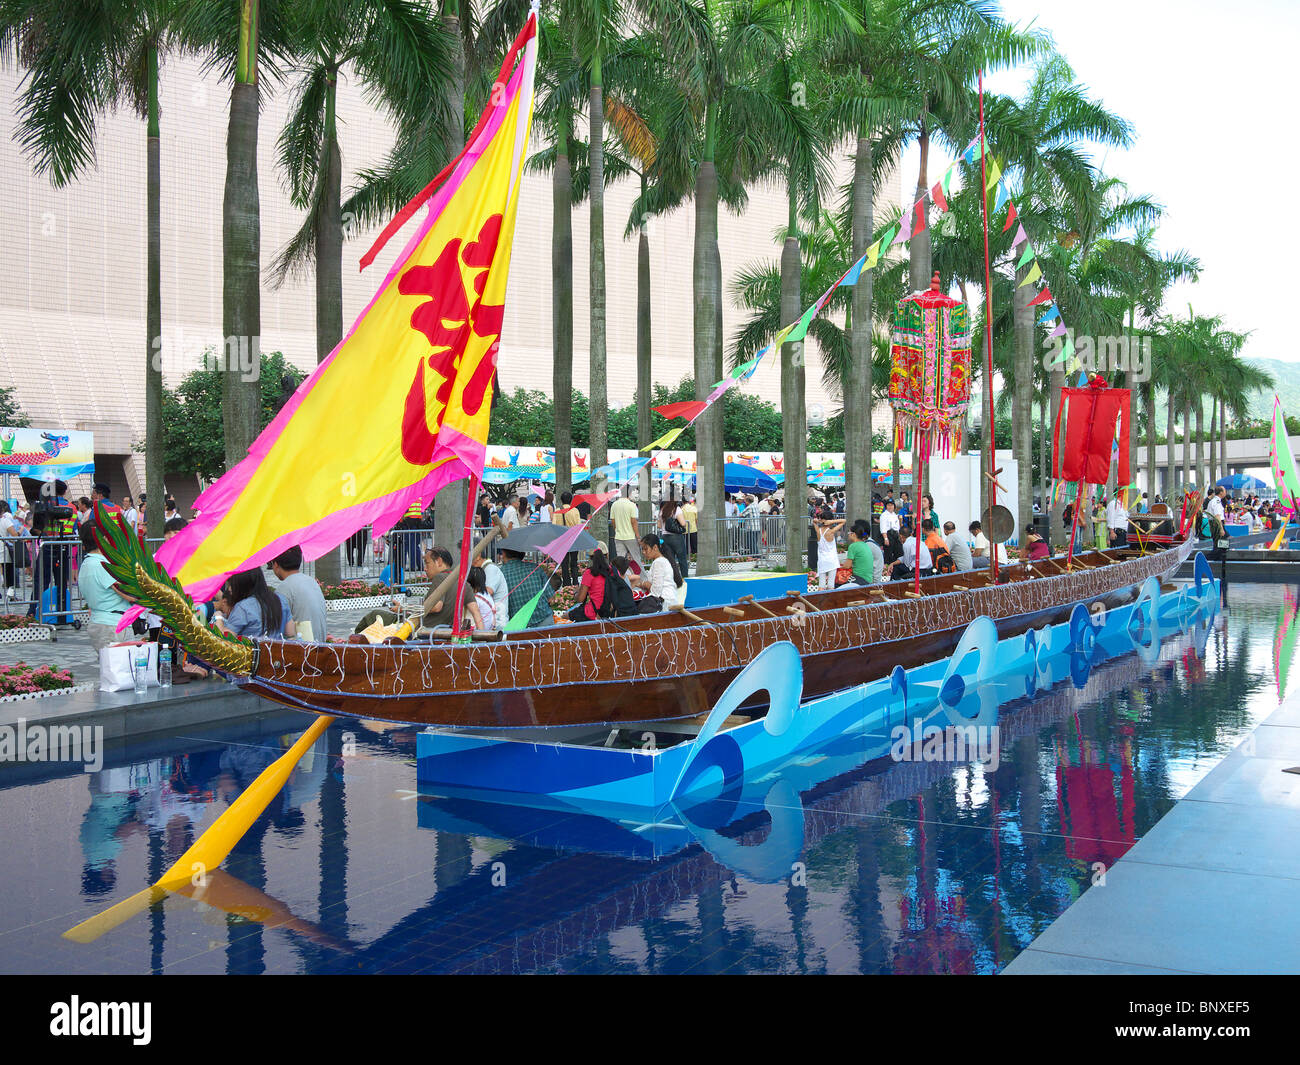 A Dragon Boat on display at the Dragon Boat Festival in Hong Kong Stock Photo